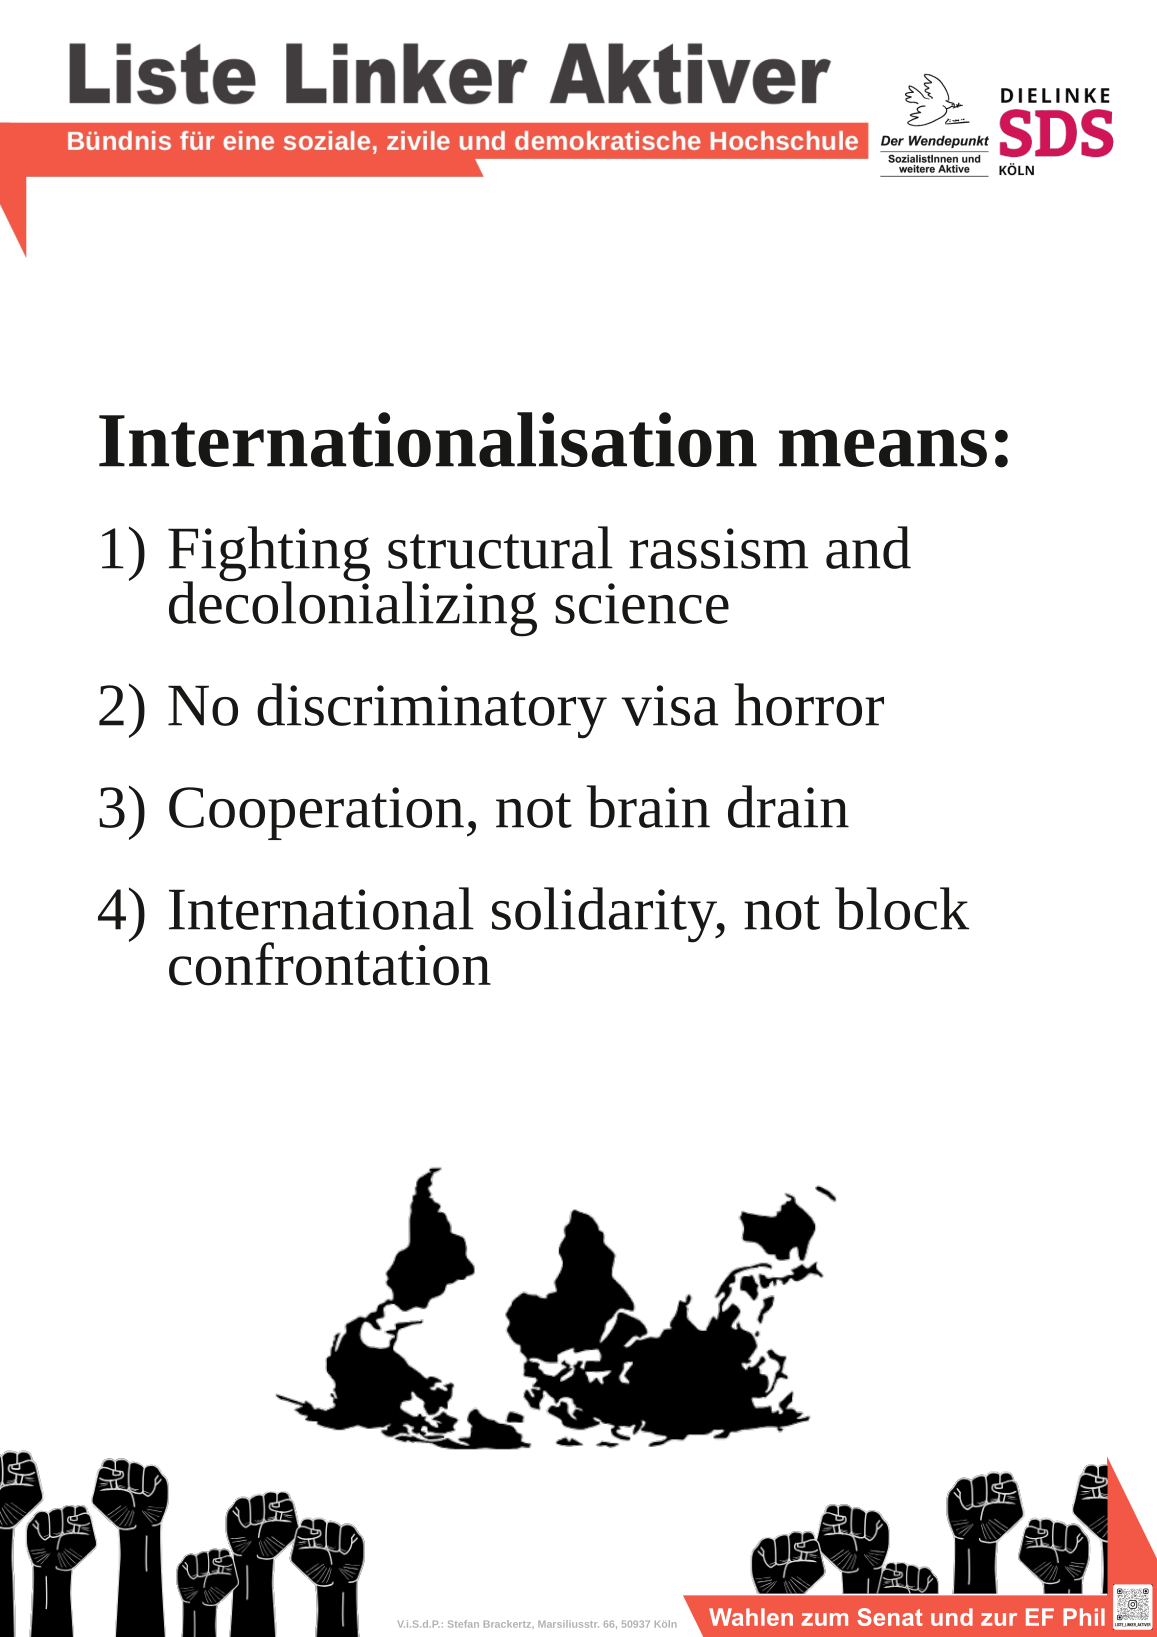 Internationalisation